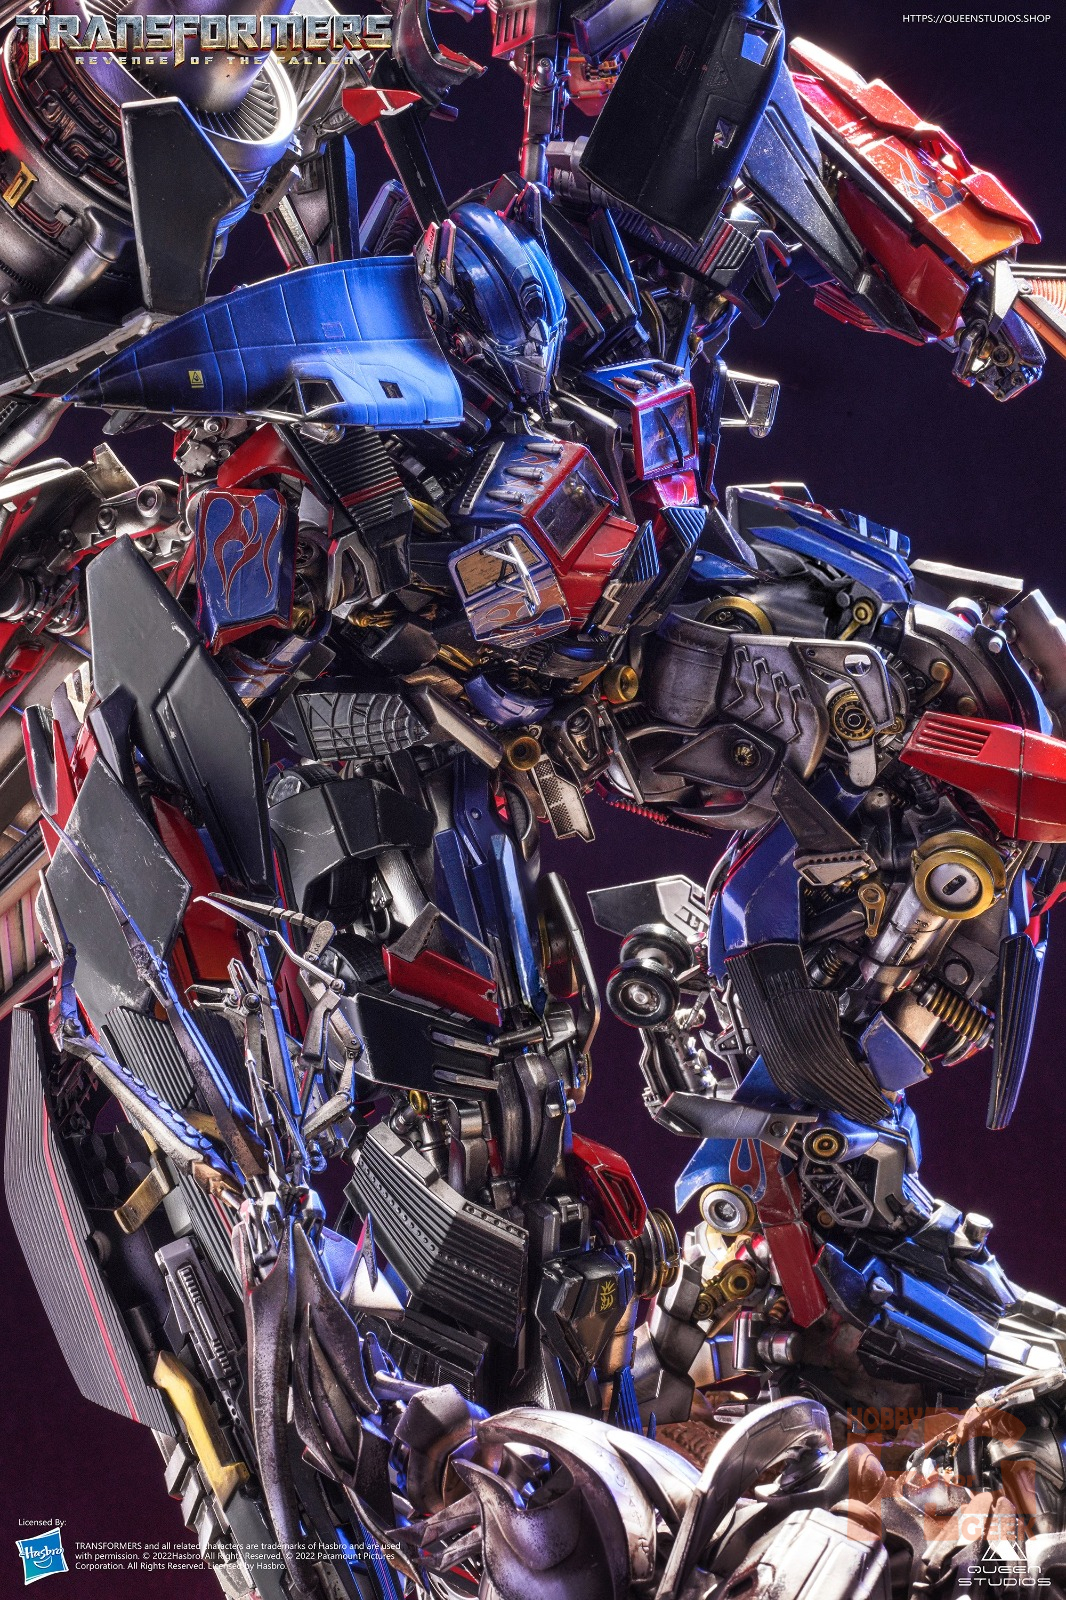 queen-studios-transformers-revenge-of-the-fallen-jetpower-optimus-prime-vs-megatron-diorama